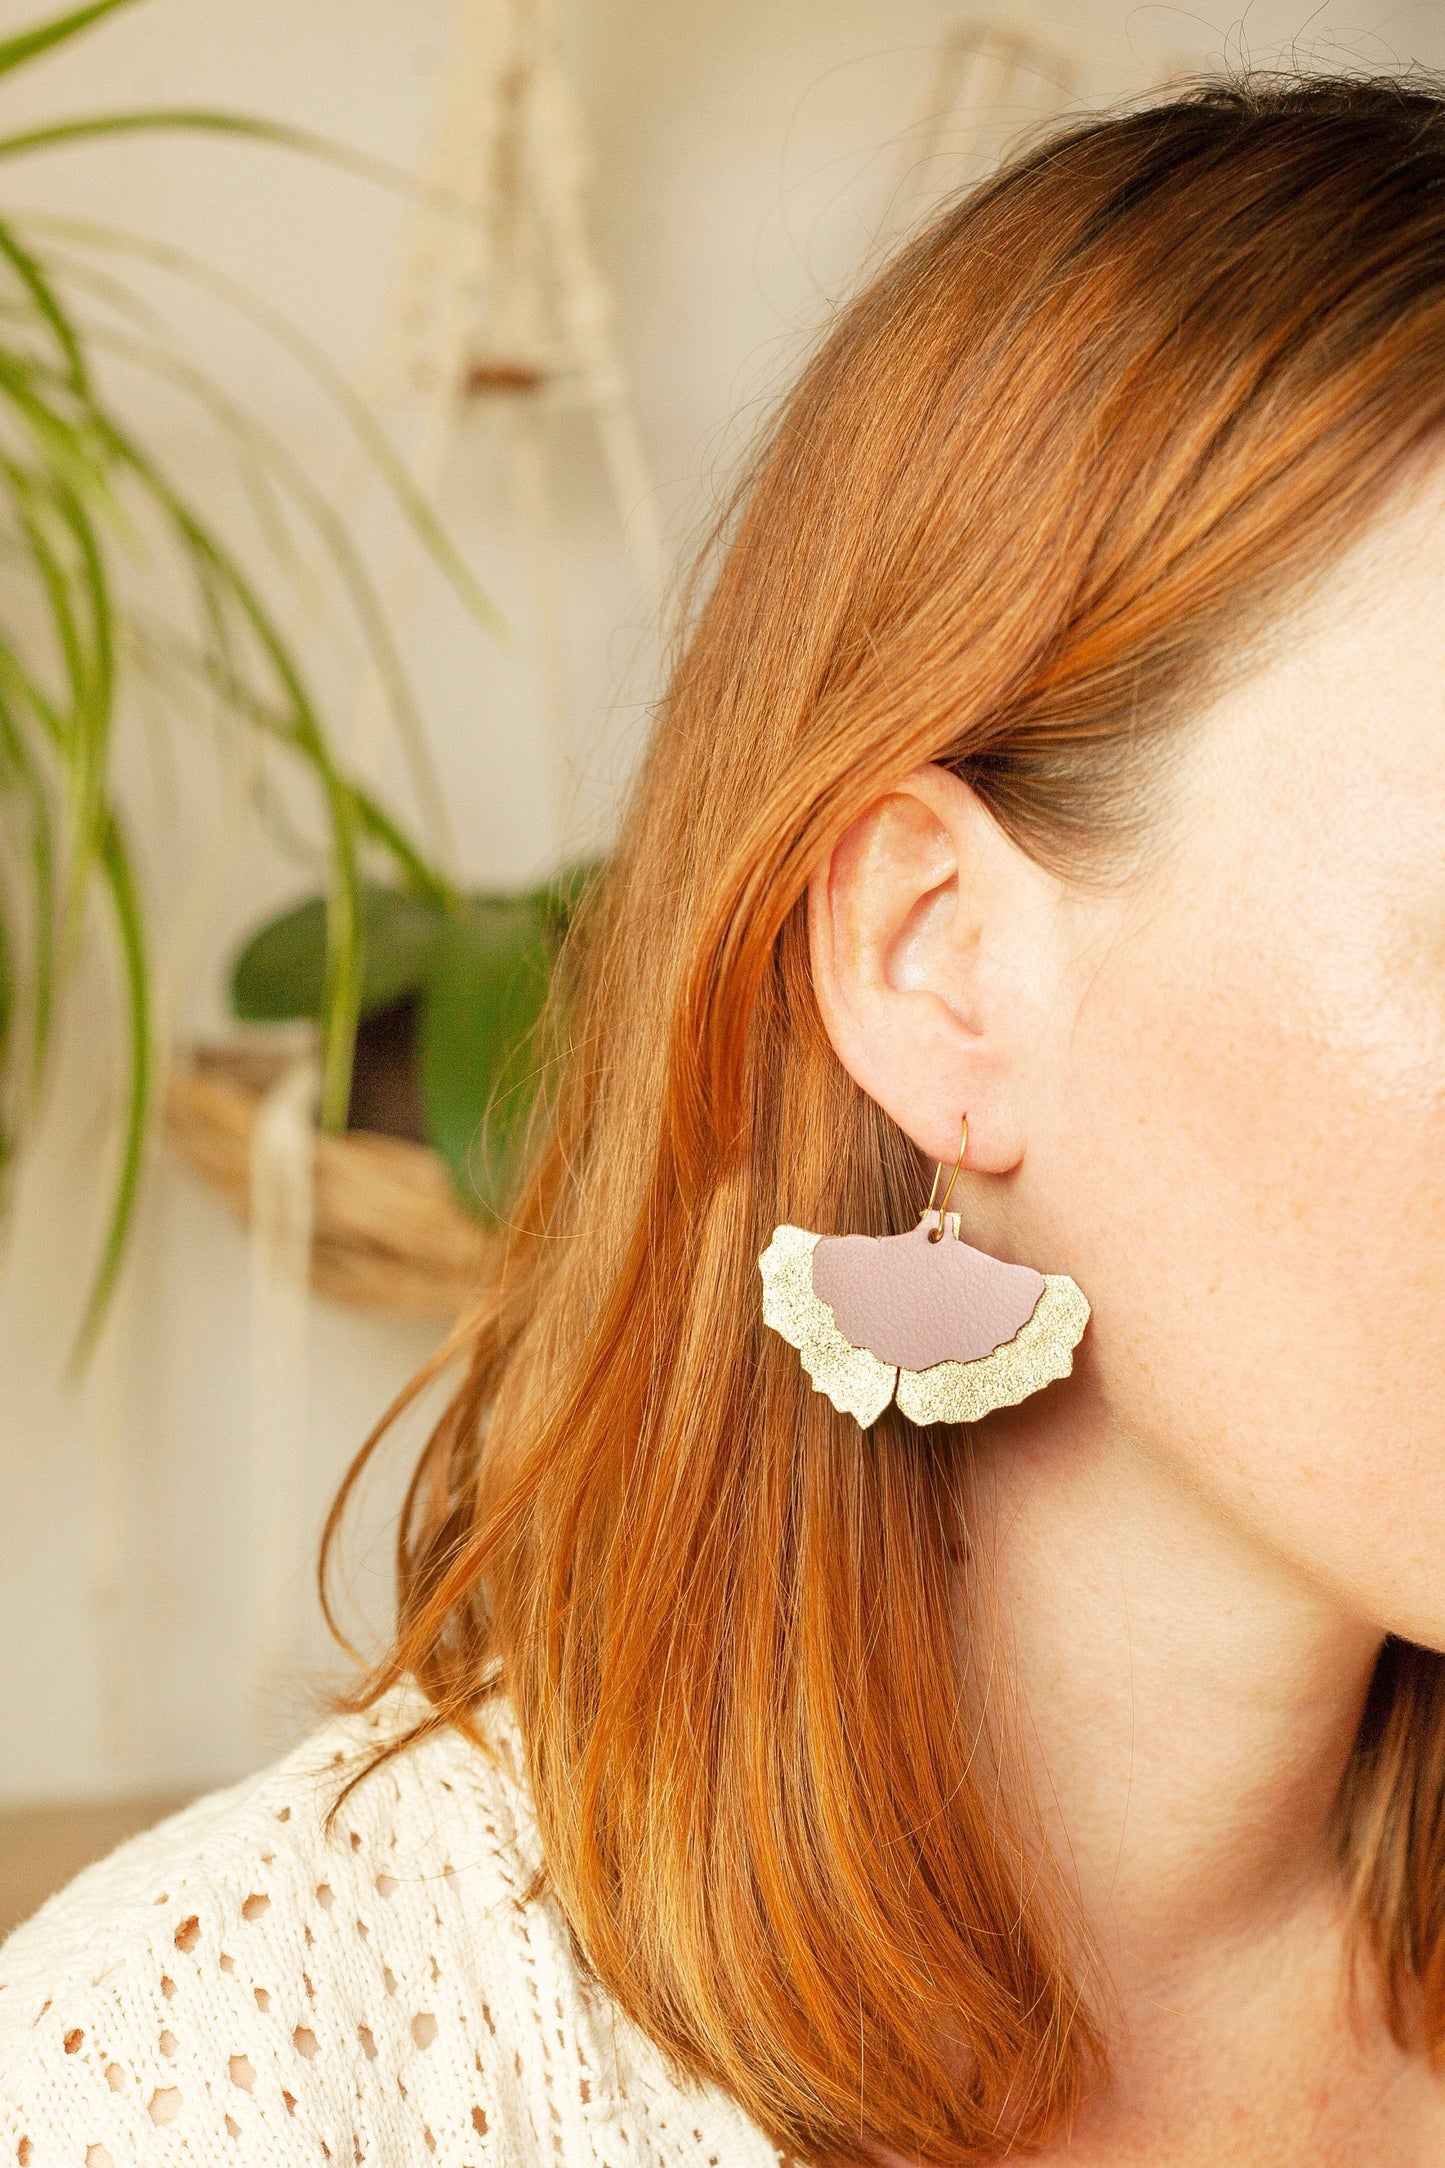 Ginkgoblatt-Ohrringe aus goldenem und rosafarbenem Leder